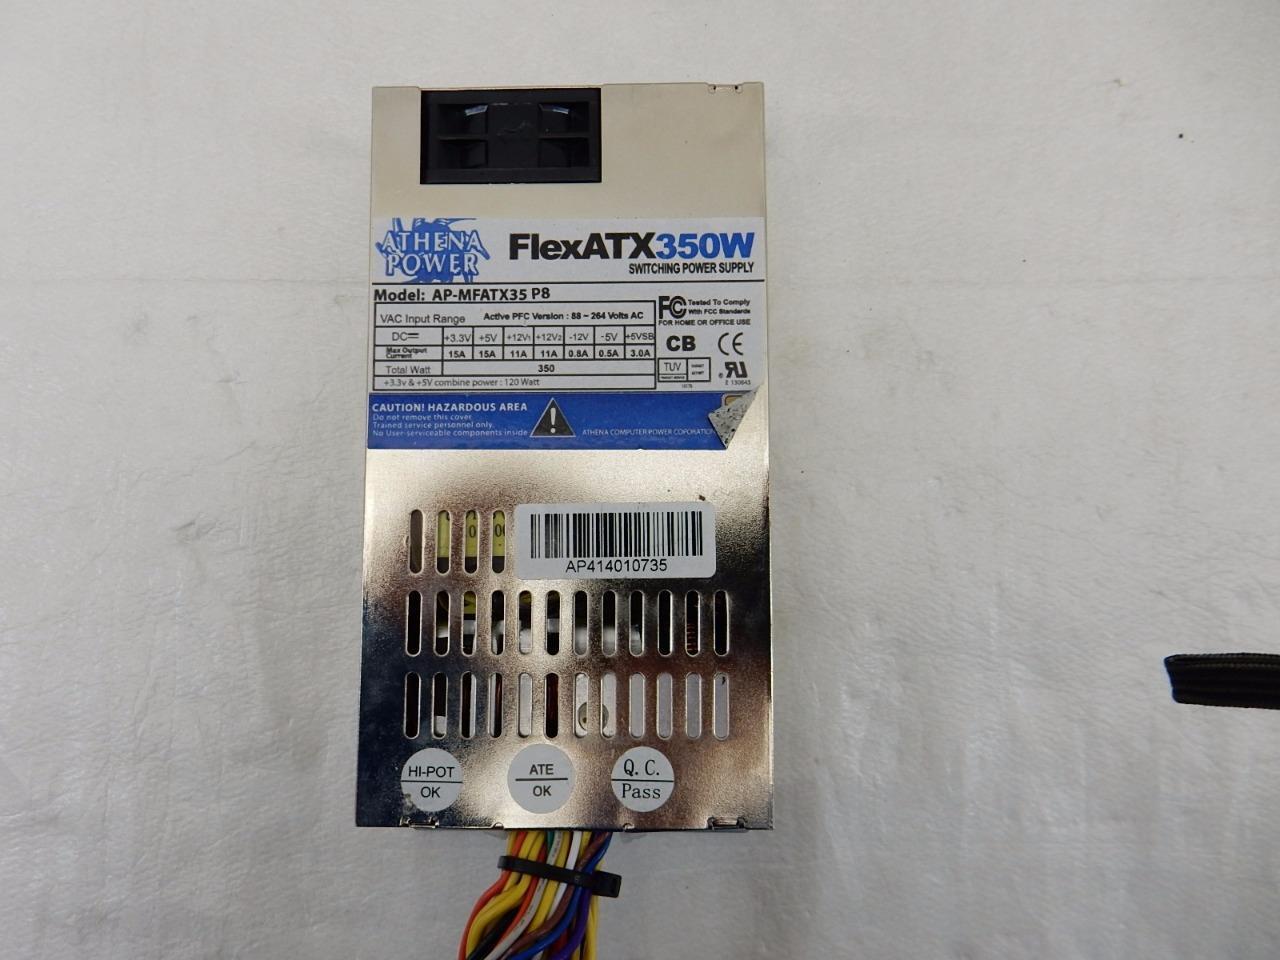 Athena Power 1U AP-MFATX35P8 FlexATX ITX Mini-ITX 350 Watt Slim Power Supply